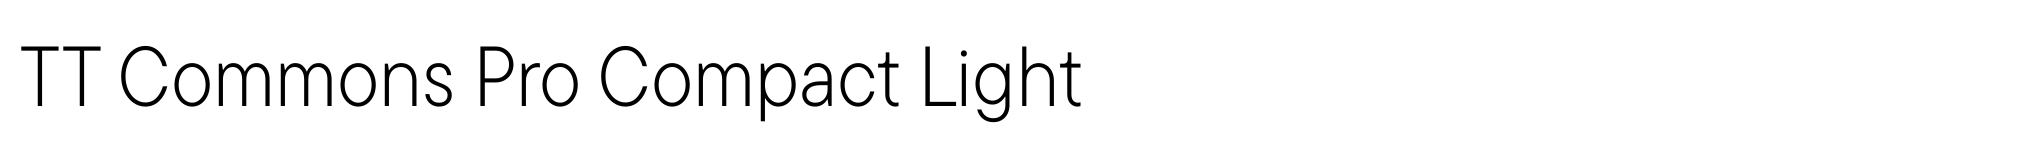 TT Commons Pro Compact Light image